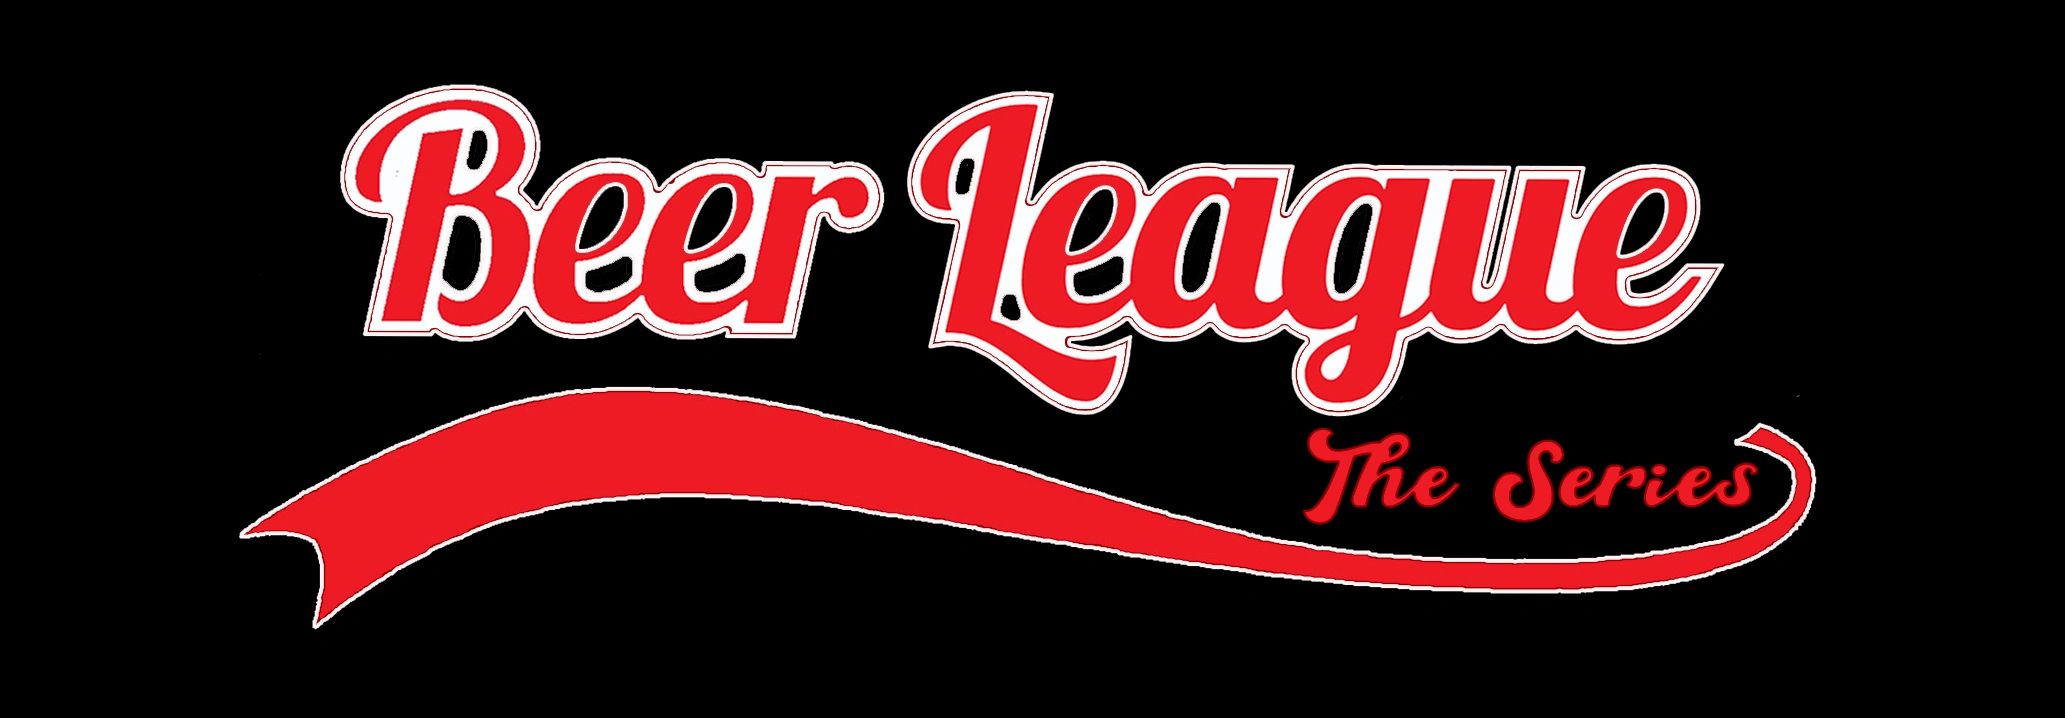 beer league logo